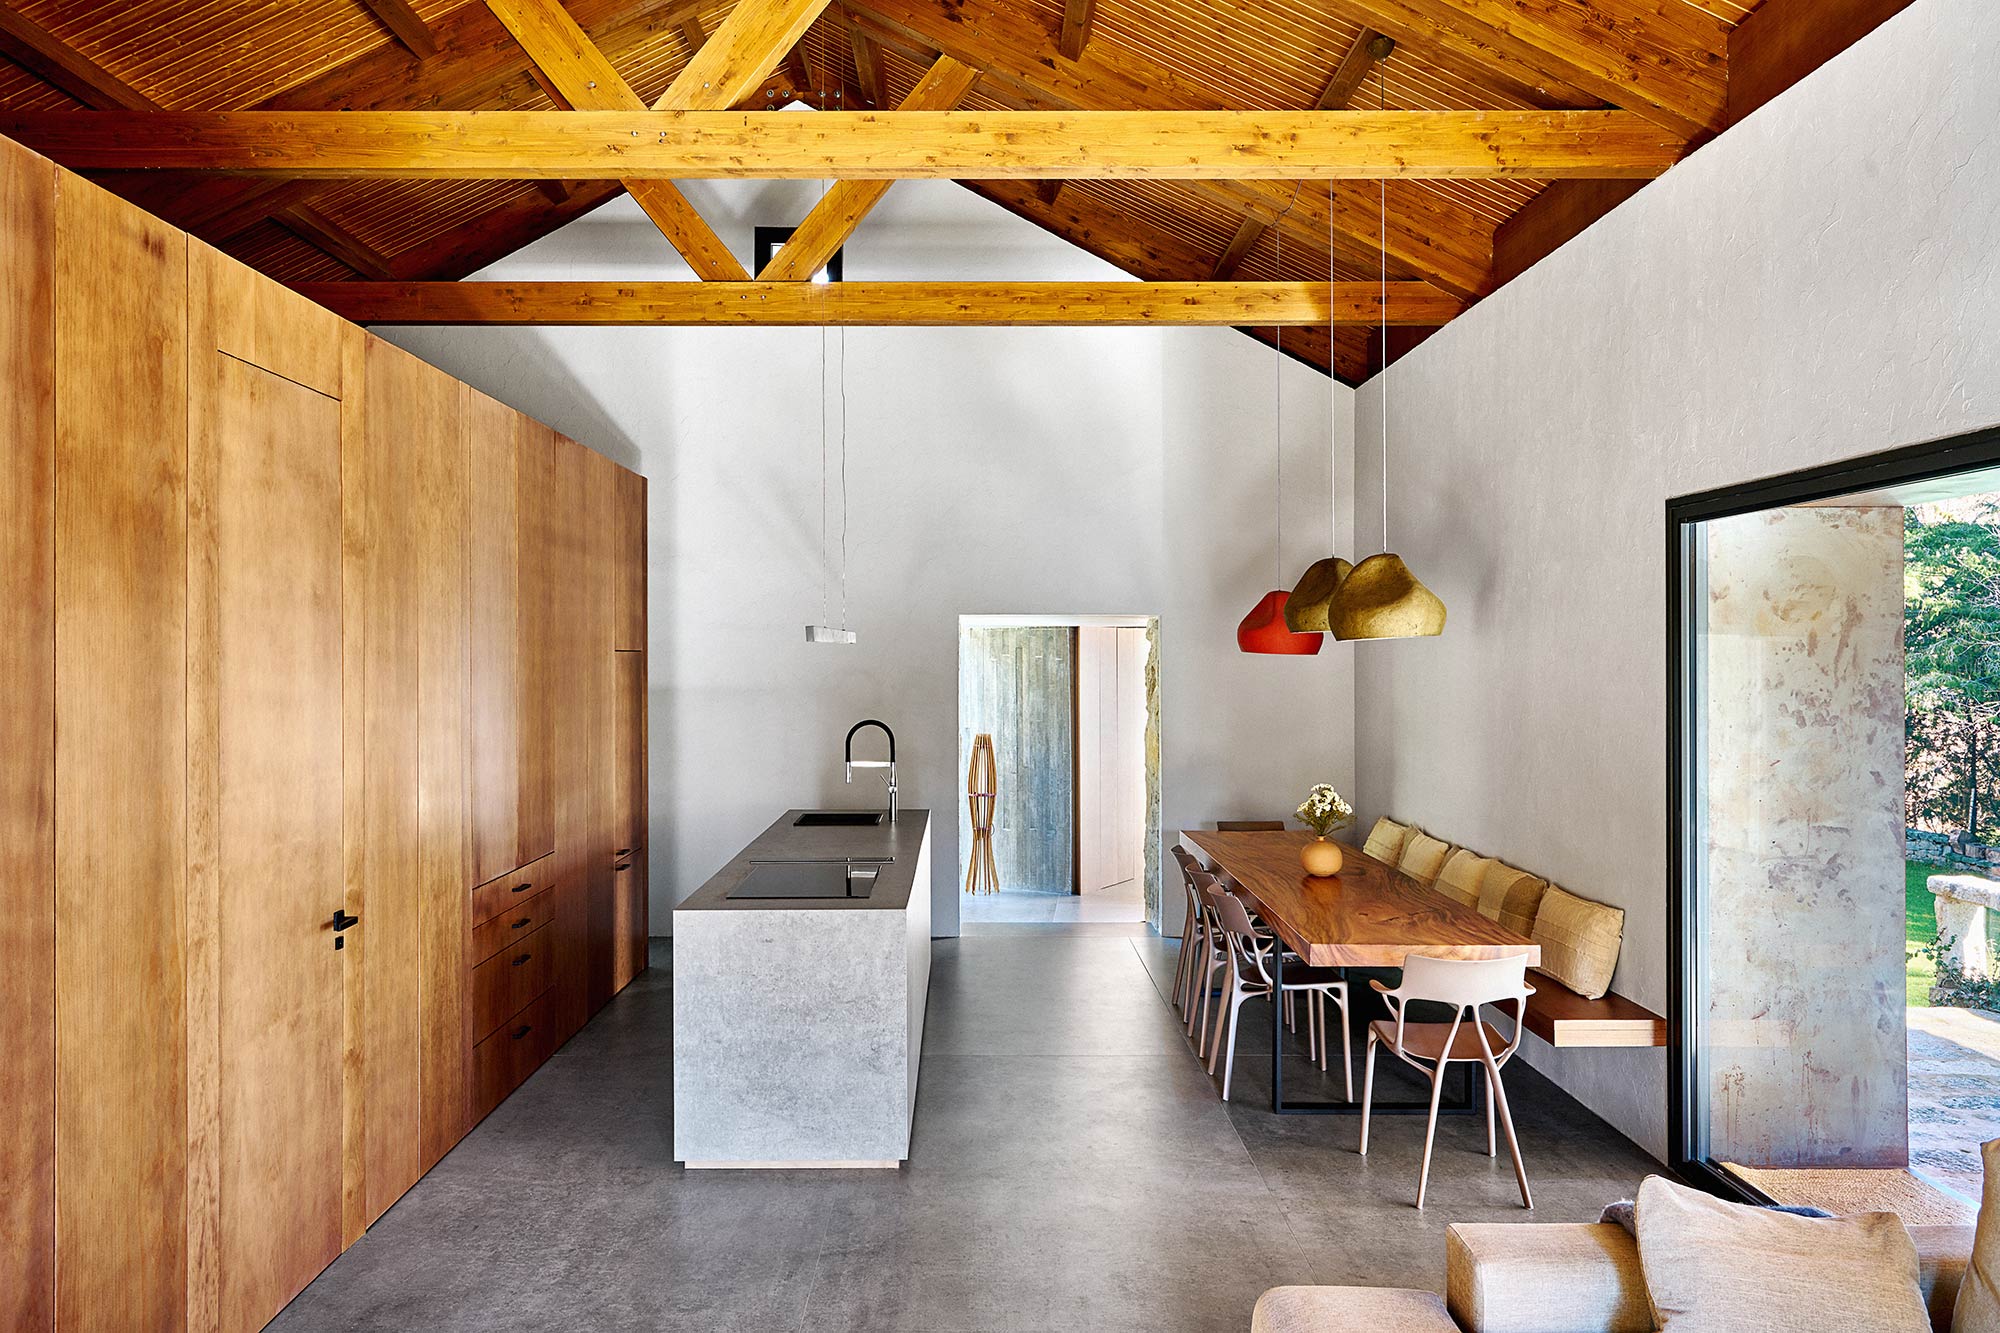 Image of Casa Navacerrada LGC 2 in A modern and timeless interior - Cosentino